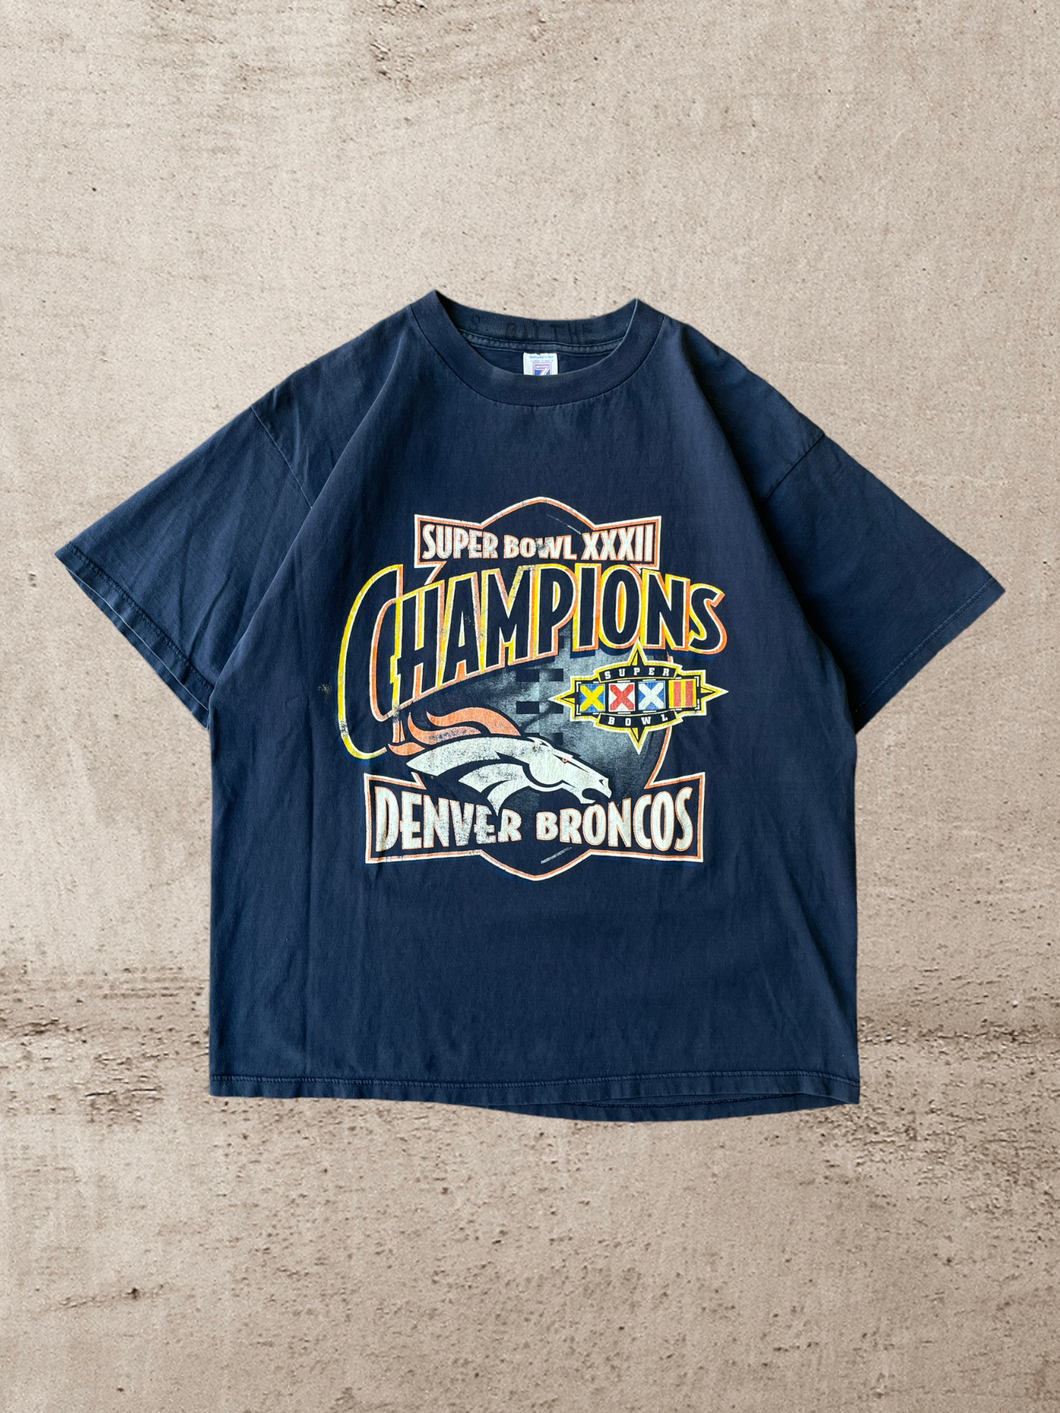 1998 Denver Broncos Super Bowl Championship T-Shirt - XL